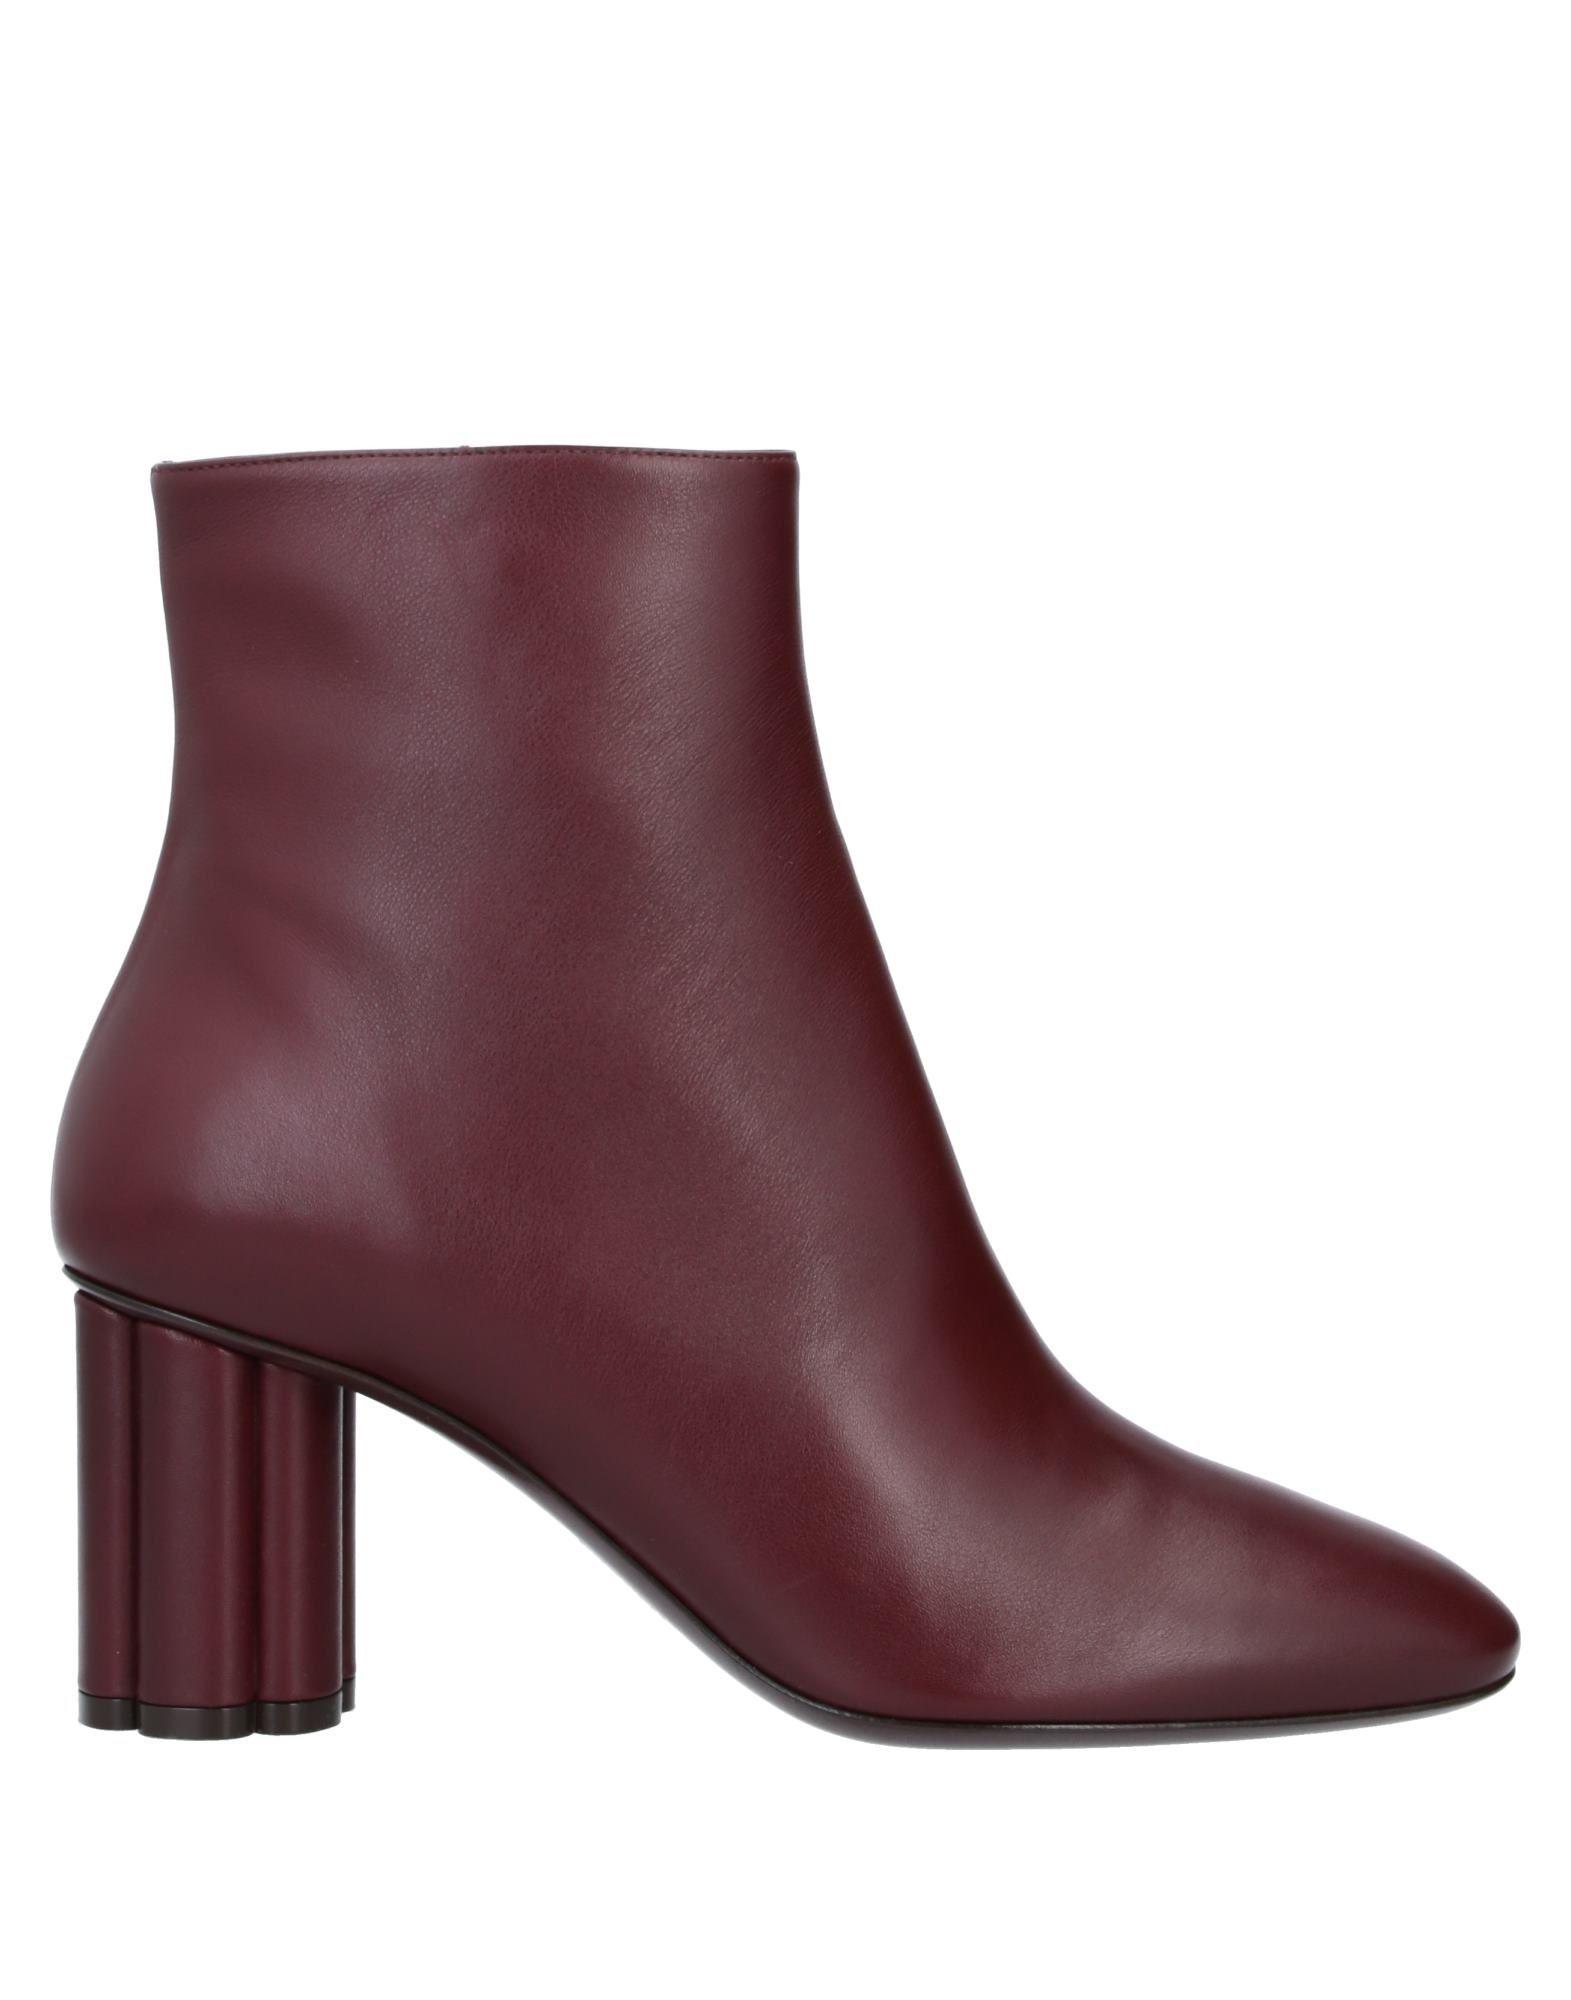 Ferragamo Leather Ankle Boots in Maroon (Purple) - Lyst